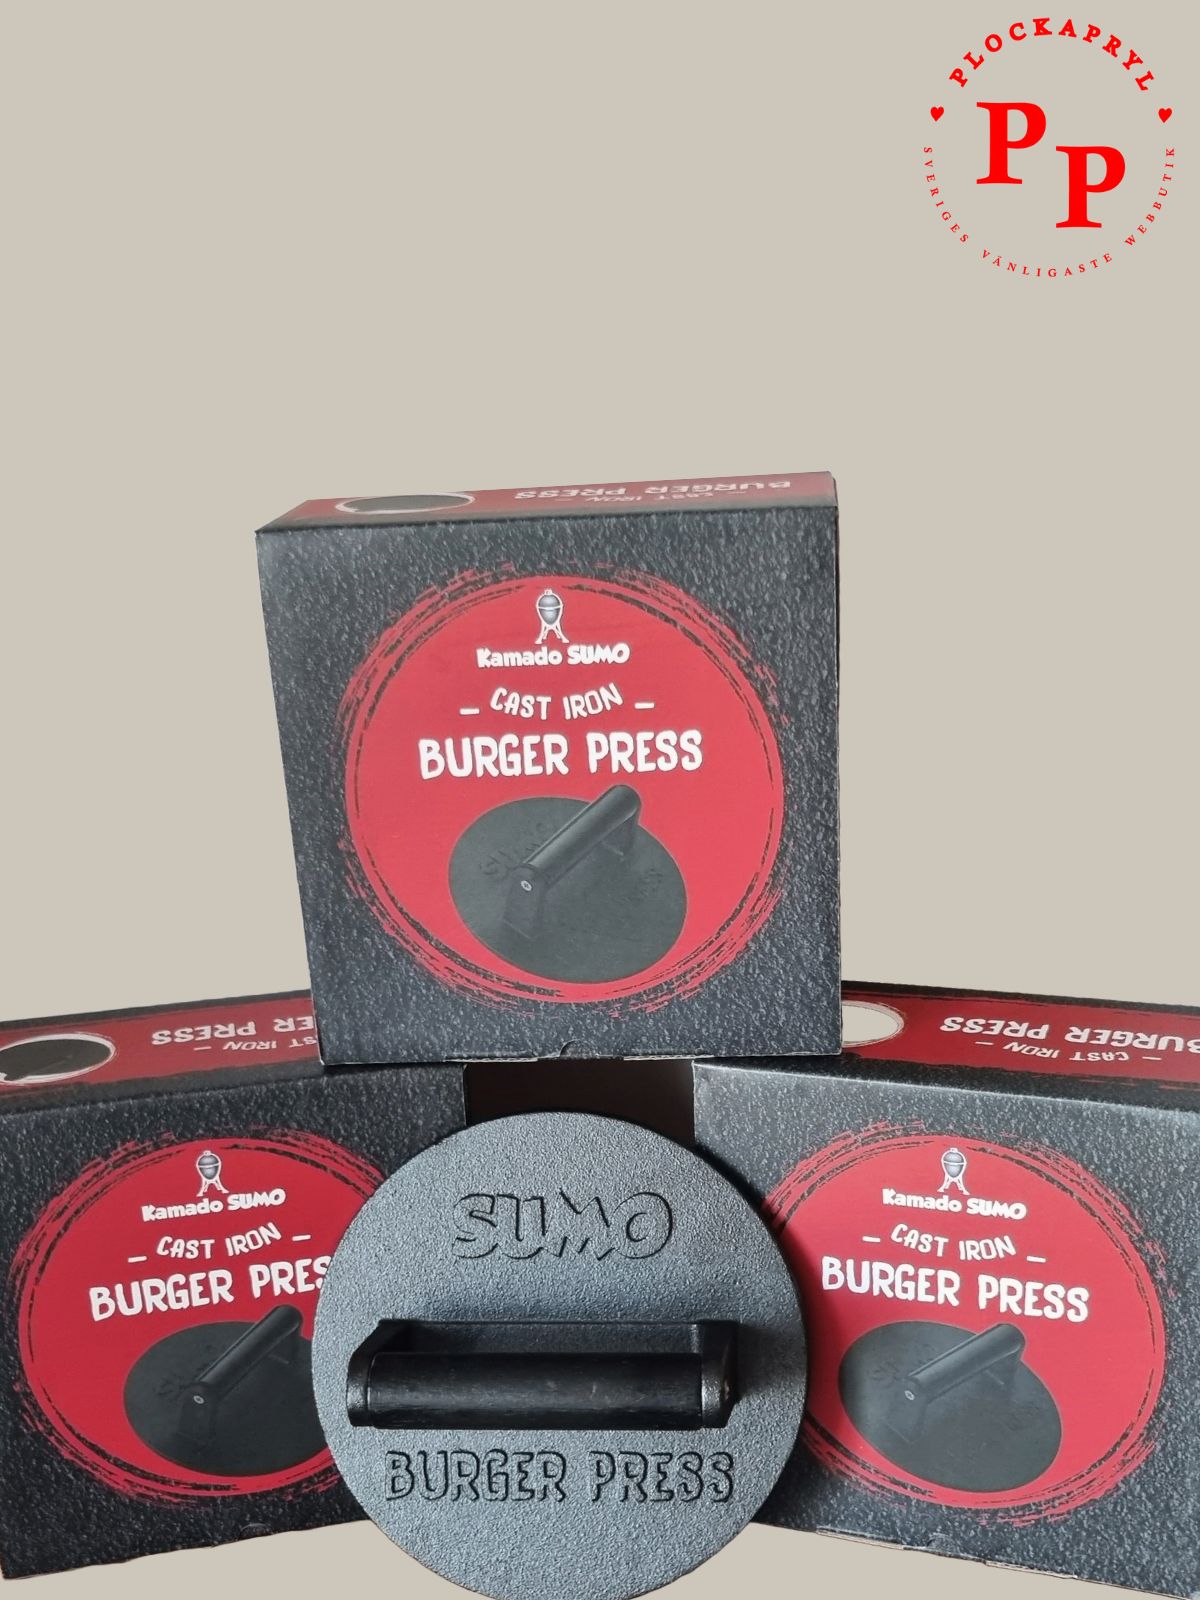 kamado sumo cast iron burger press